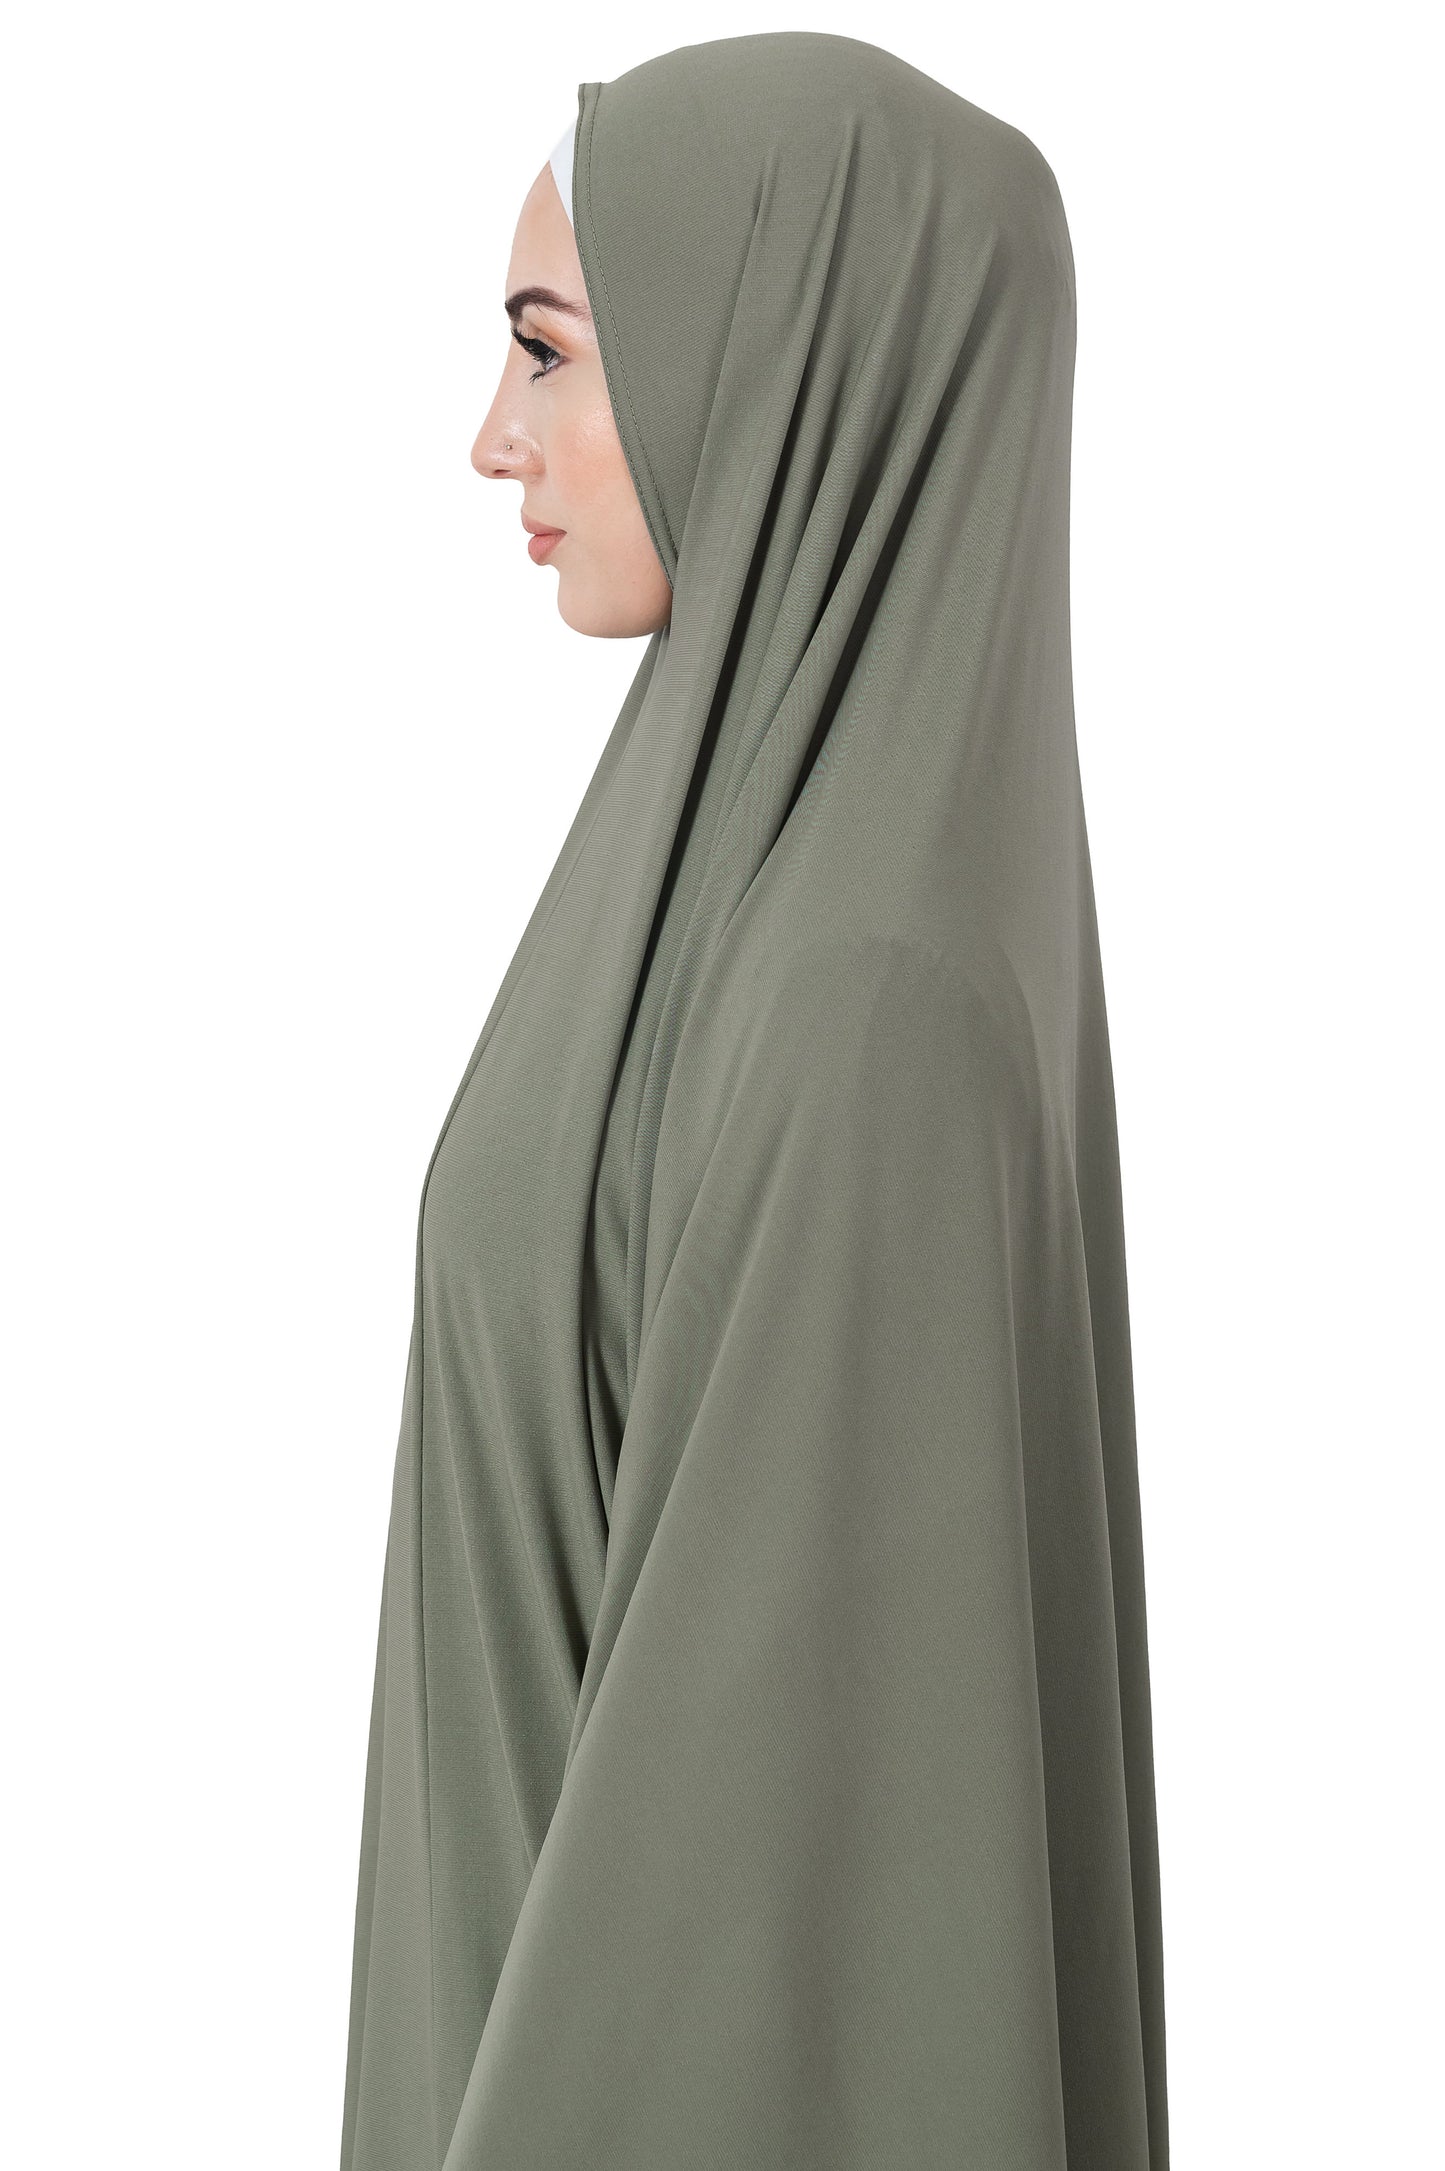 Standard Sleeved Jelbab in Olive